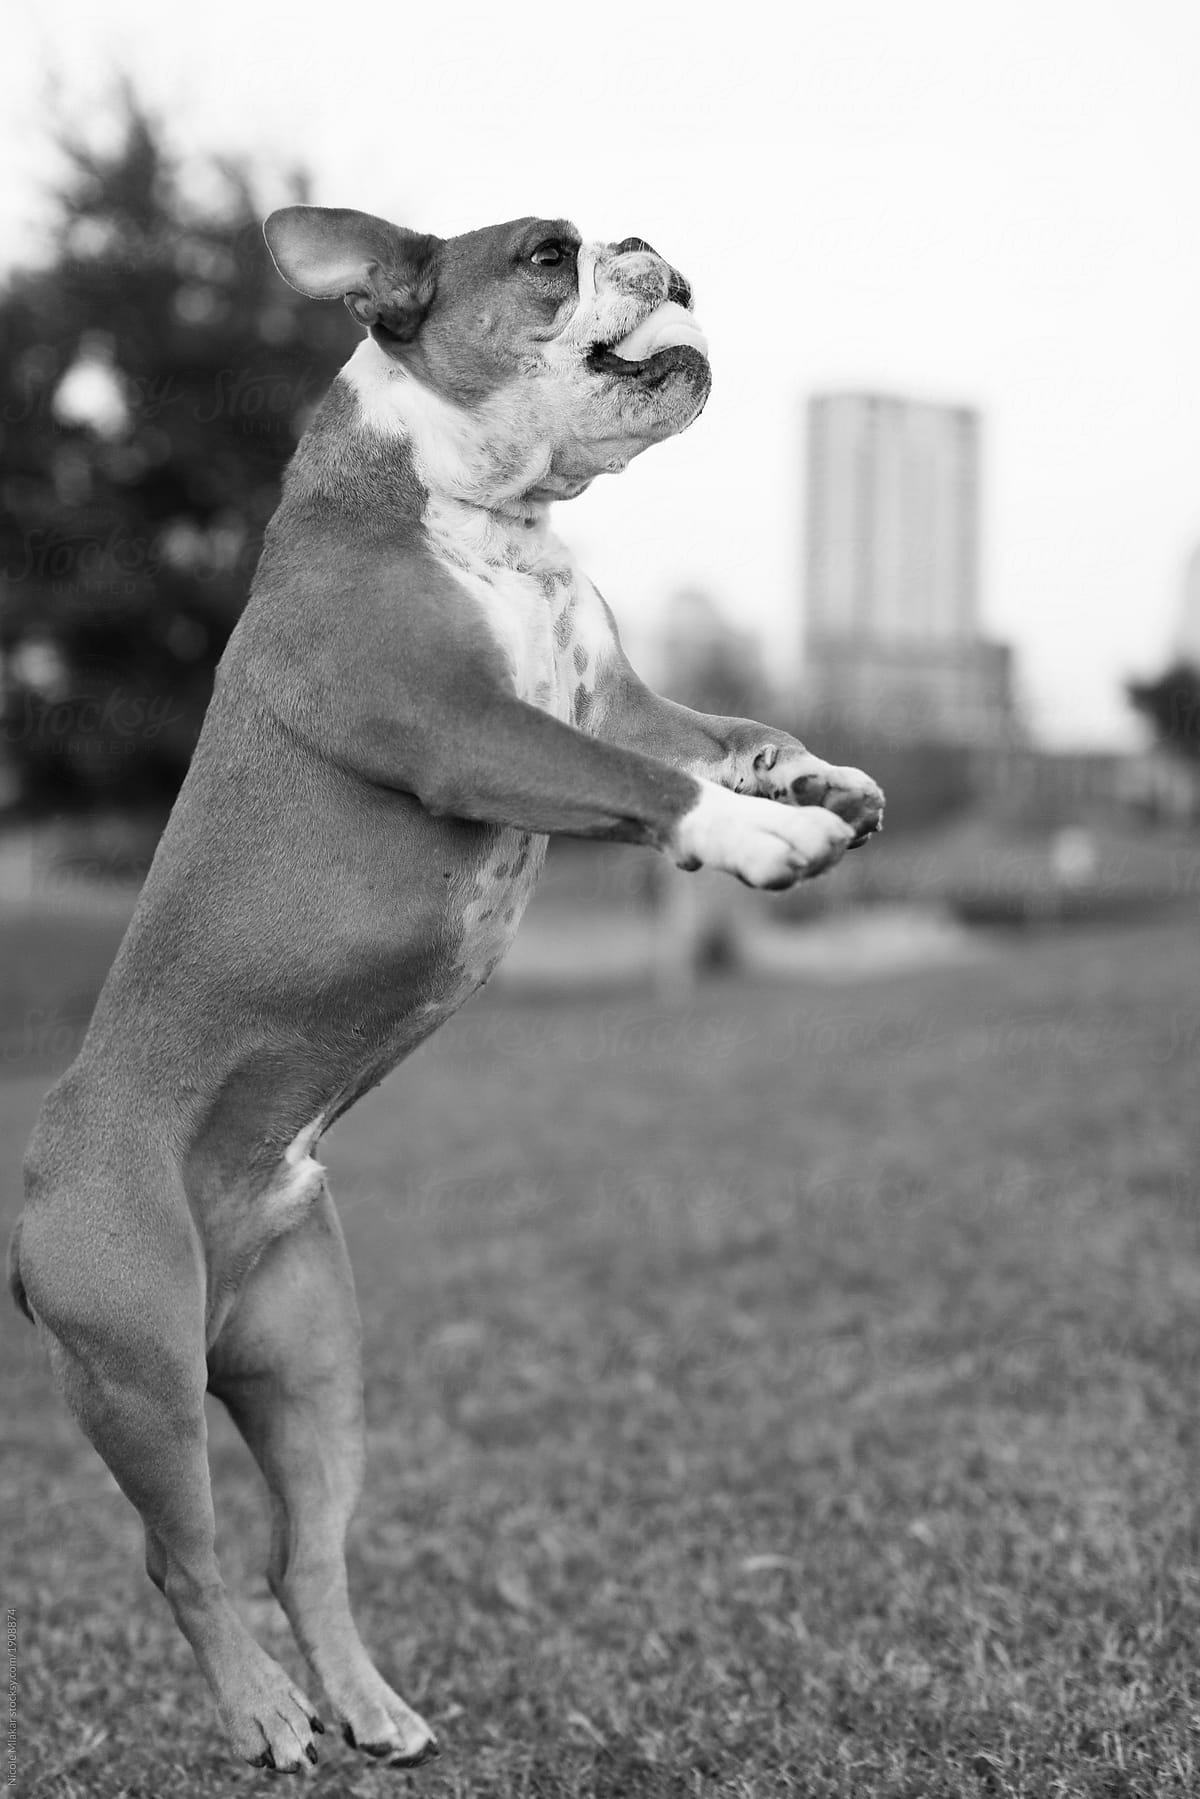 Bulldog jumping in air